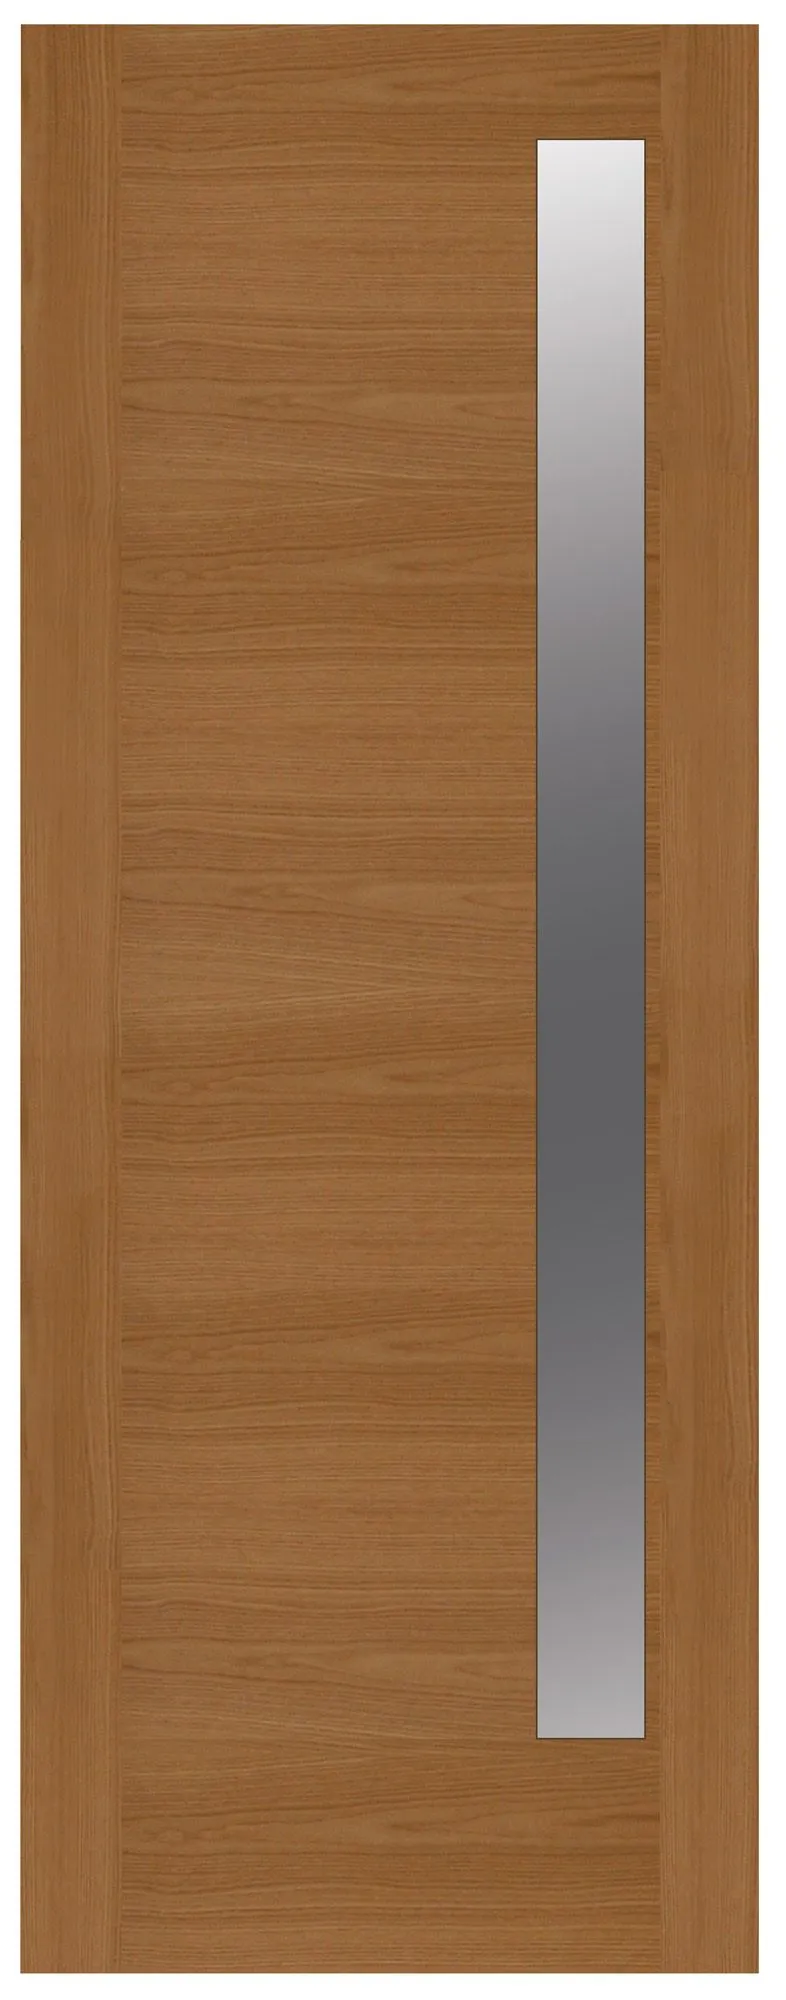 Frosted Glazed Contemporary White oak veneer LH & RH External Front Door, (H)1981mm (W)762mm